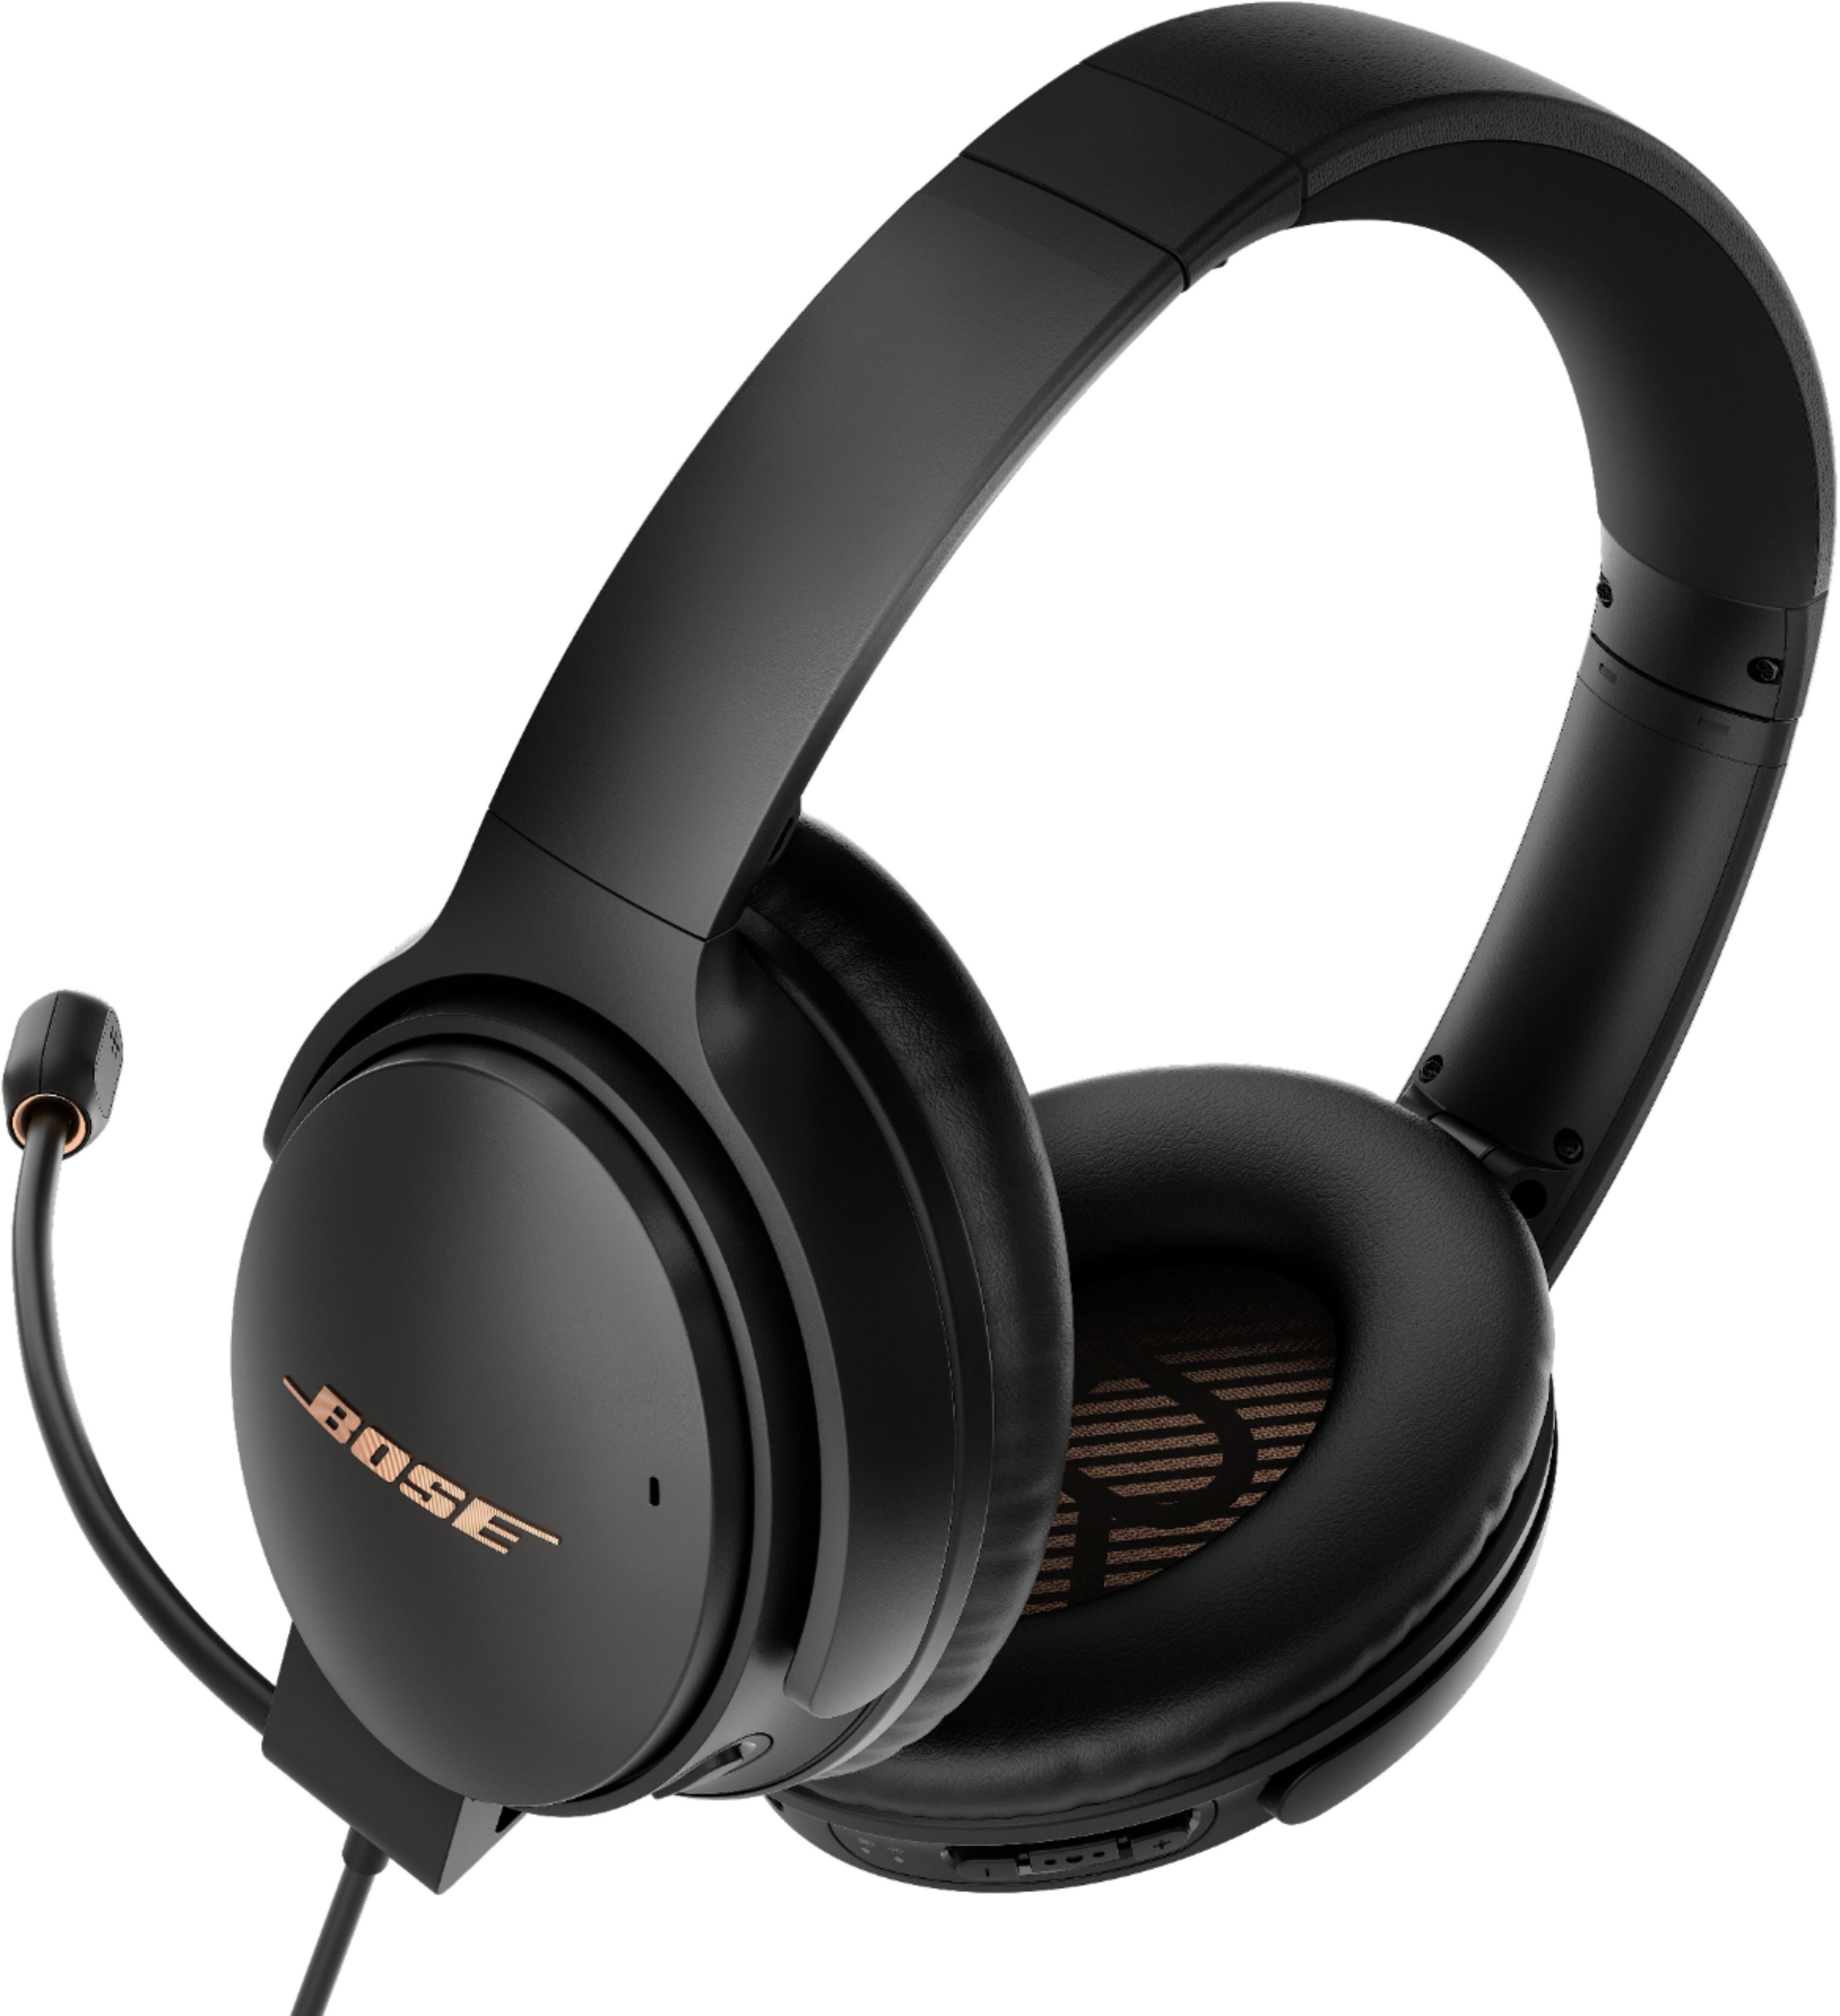 Vi ses i morgen bruser Human Best Buy: Bose QuietComfort 35 II Wireless Noise Cancelling Gaming Headset  Black 852061-0010